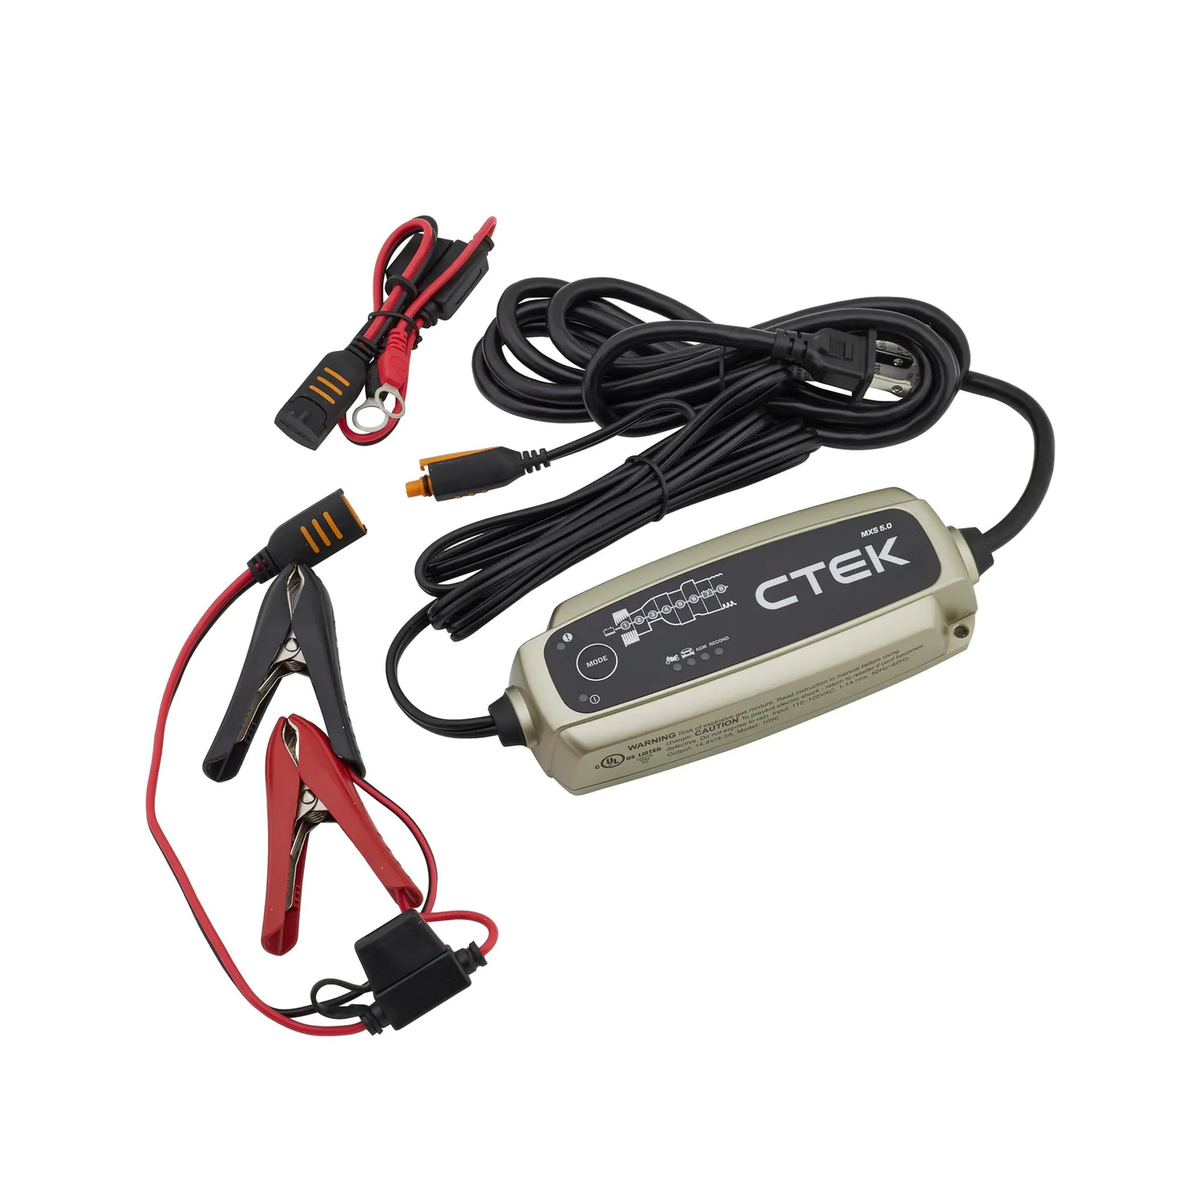 CTEK 40-206 MXS 5.0 Battery Charger 